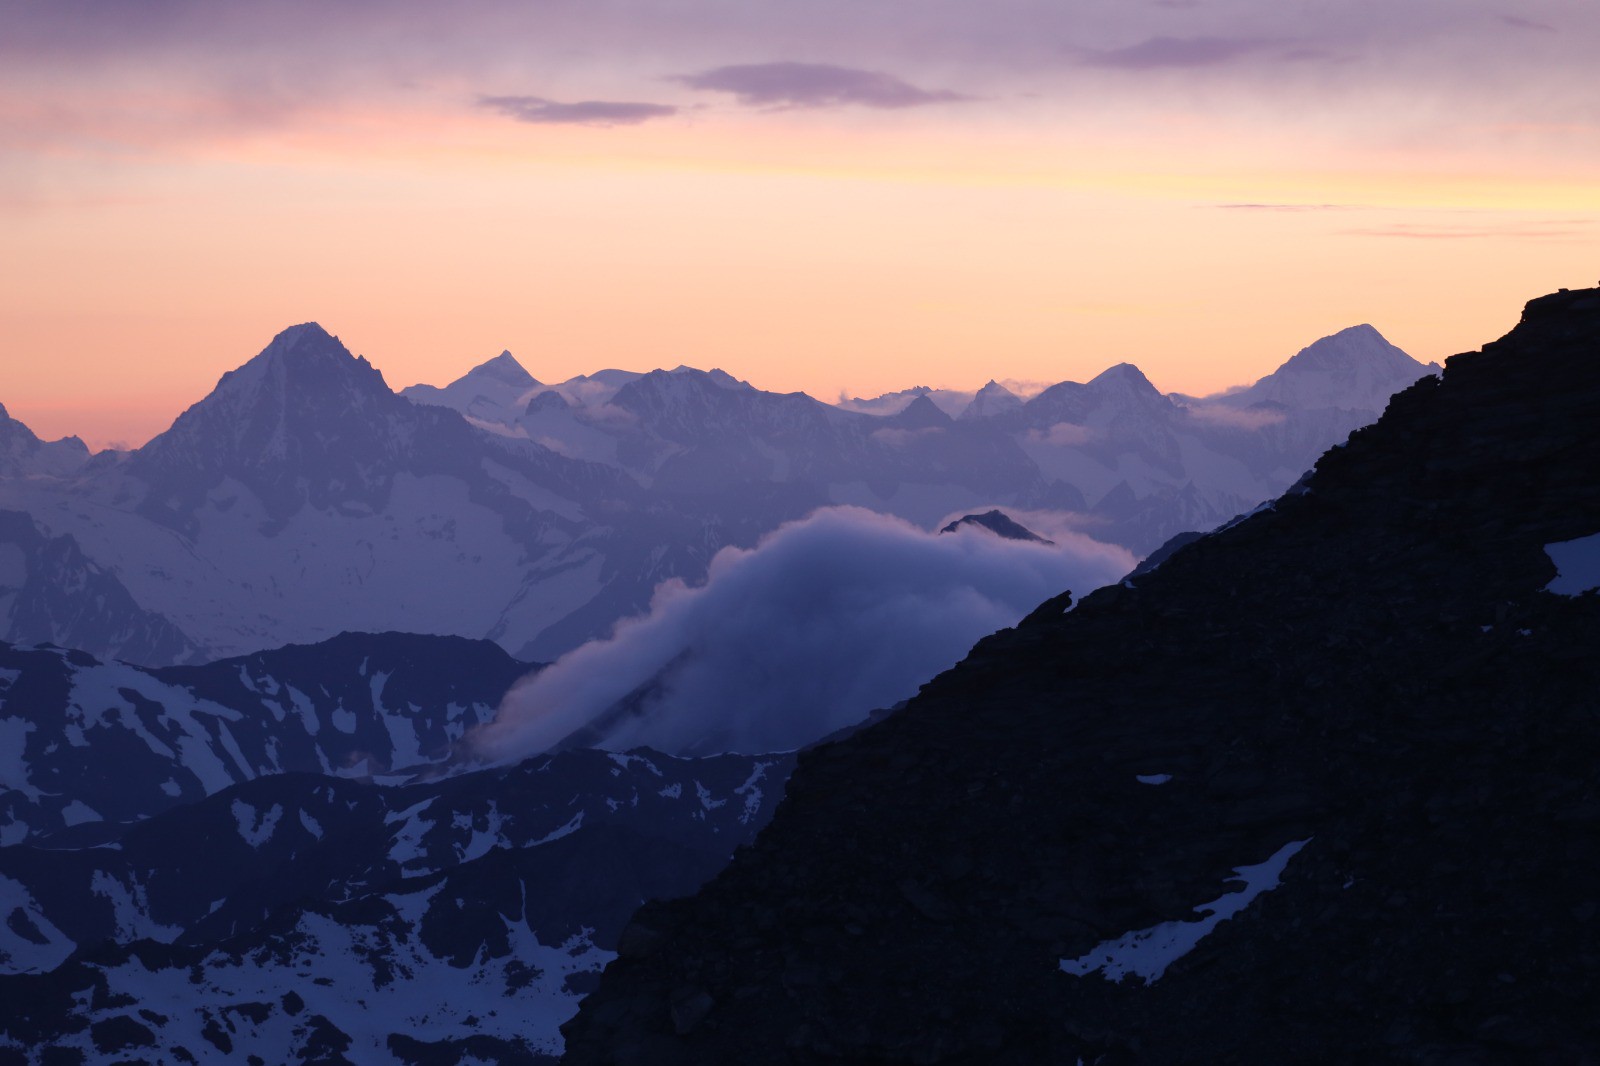 Bietchhorn, Jungfrau, et tout à droite l'Aletschhorn